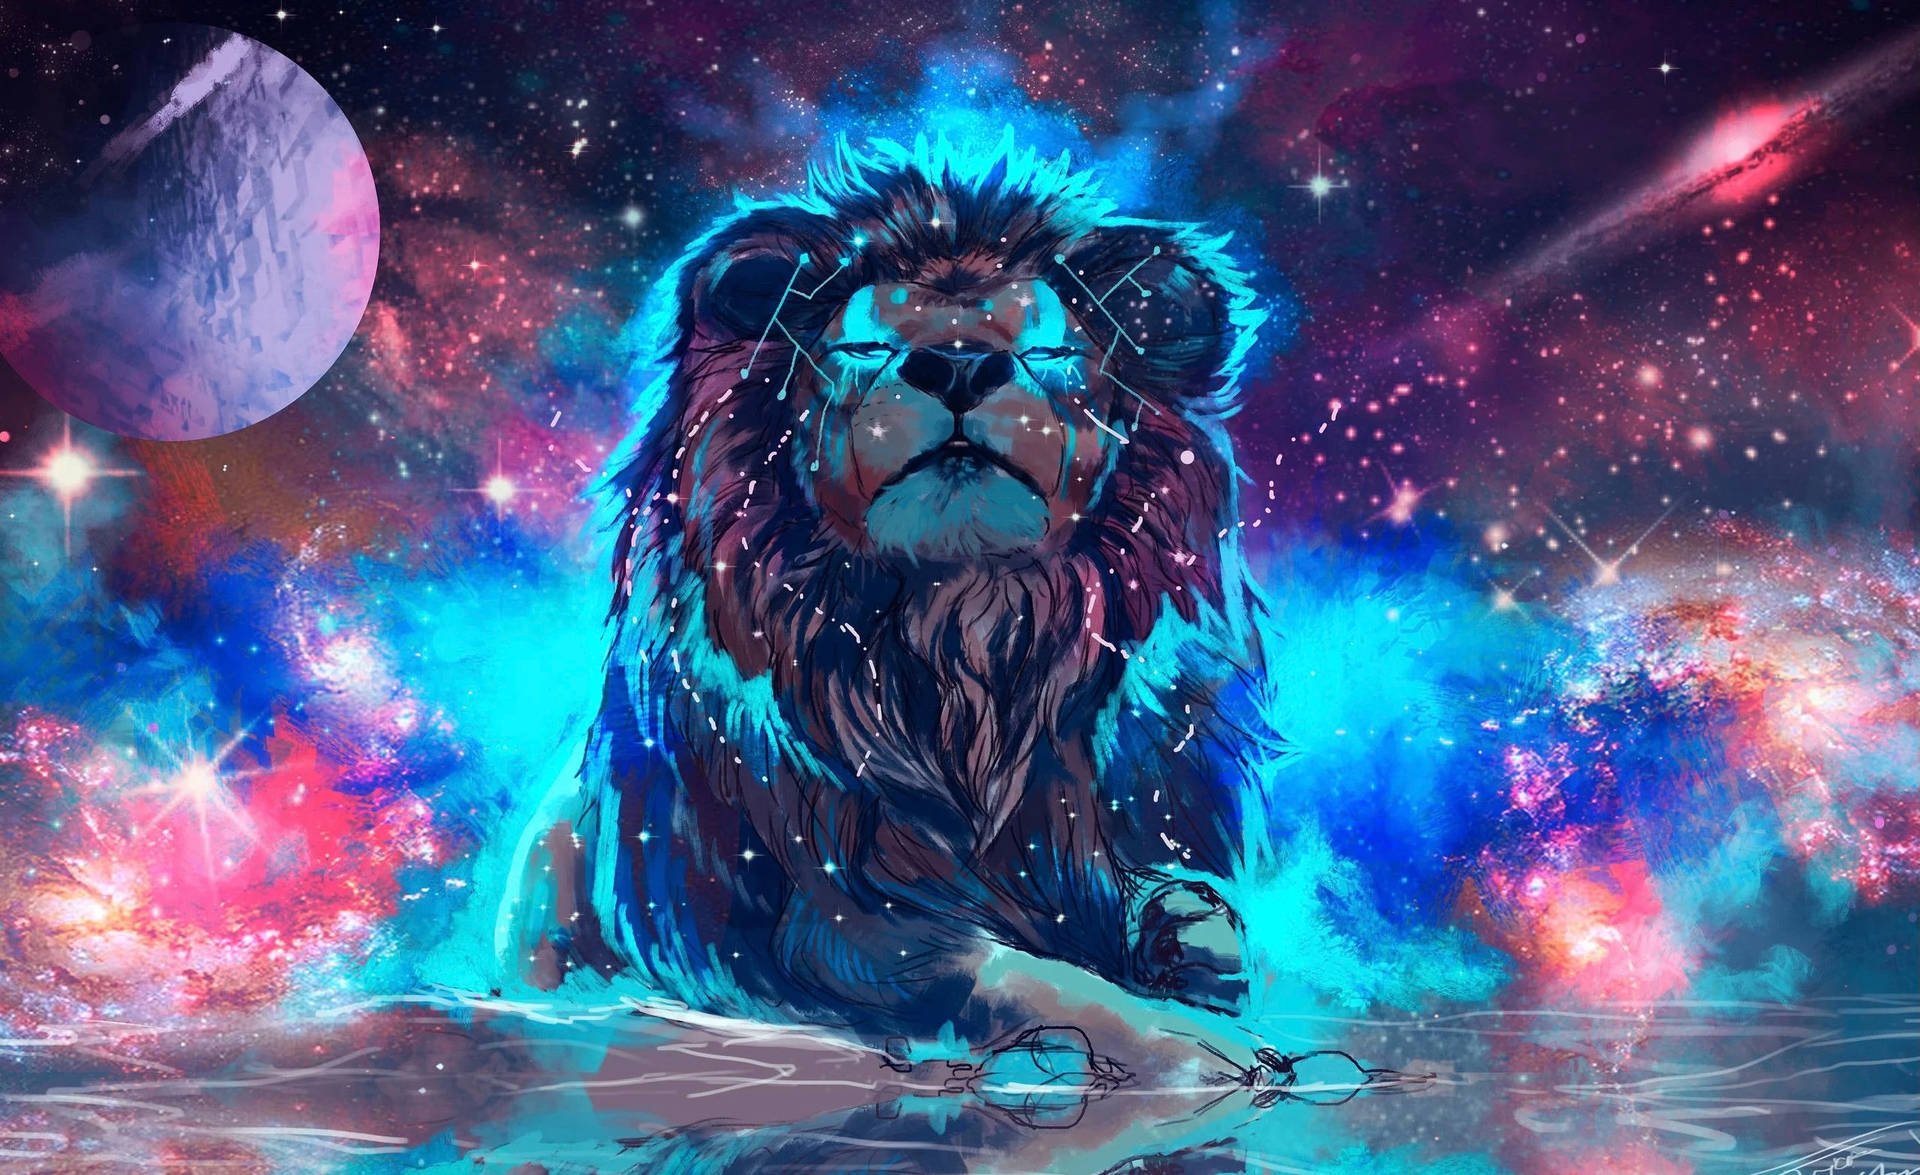 Free Galaxy Lion Wallpaper Downloads, Galaxy Lion Wallpaper for FREE